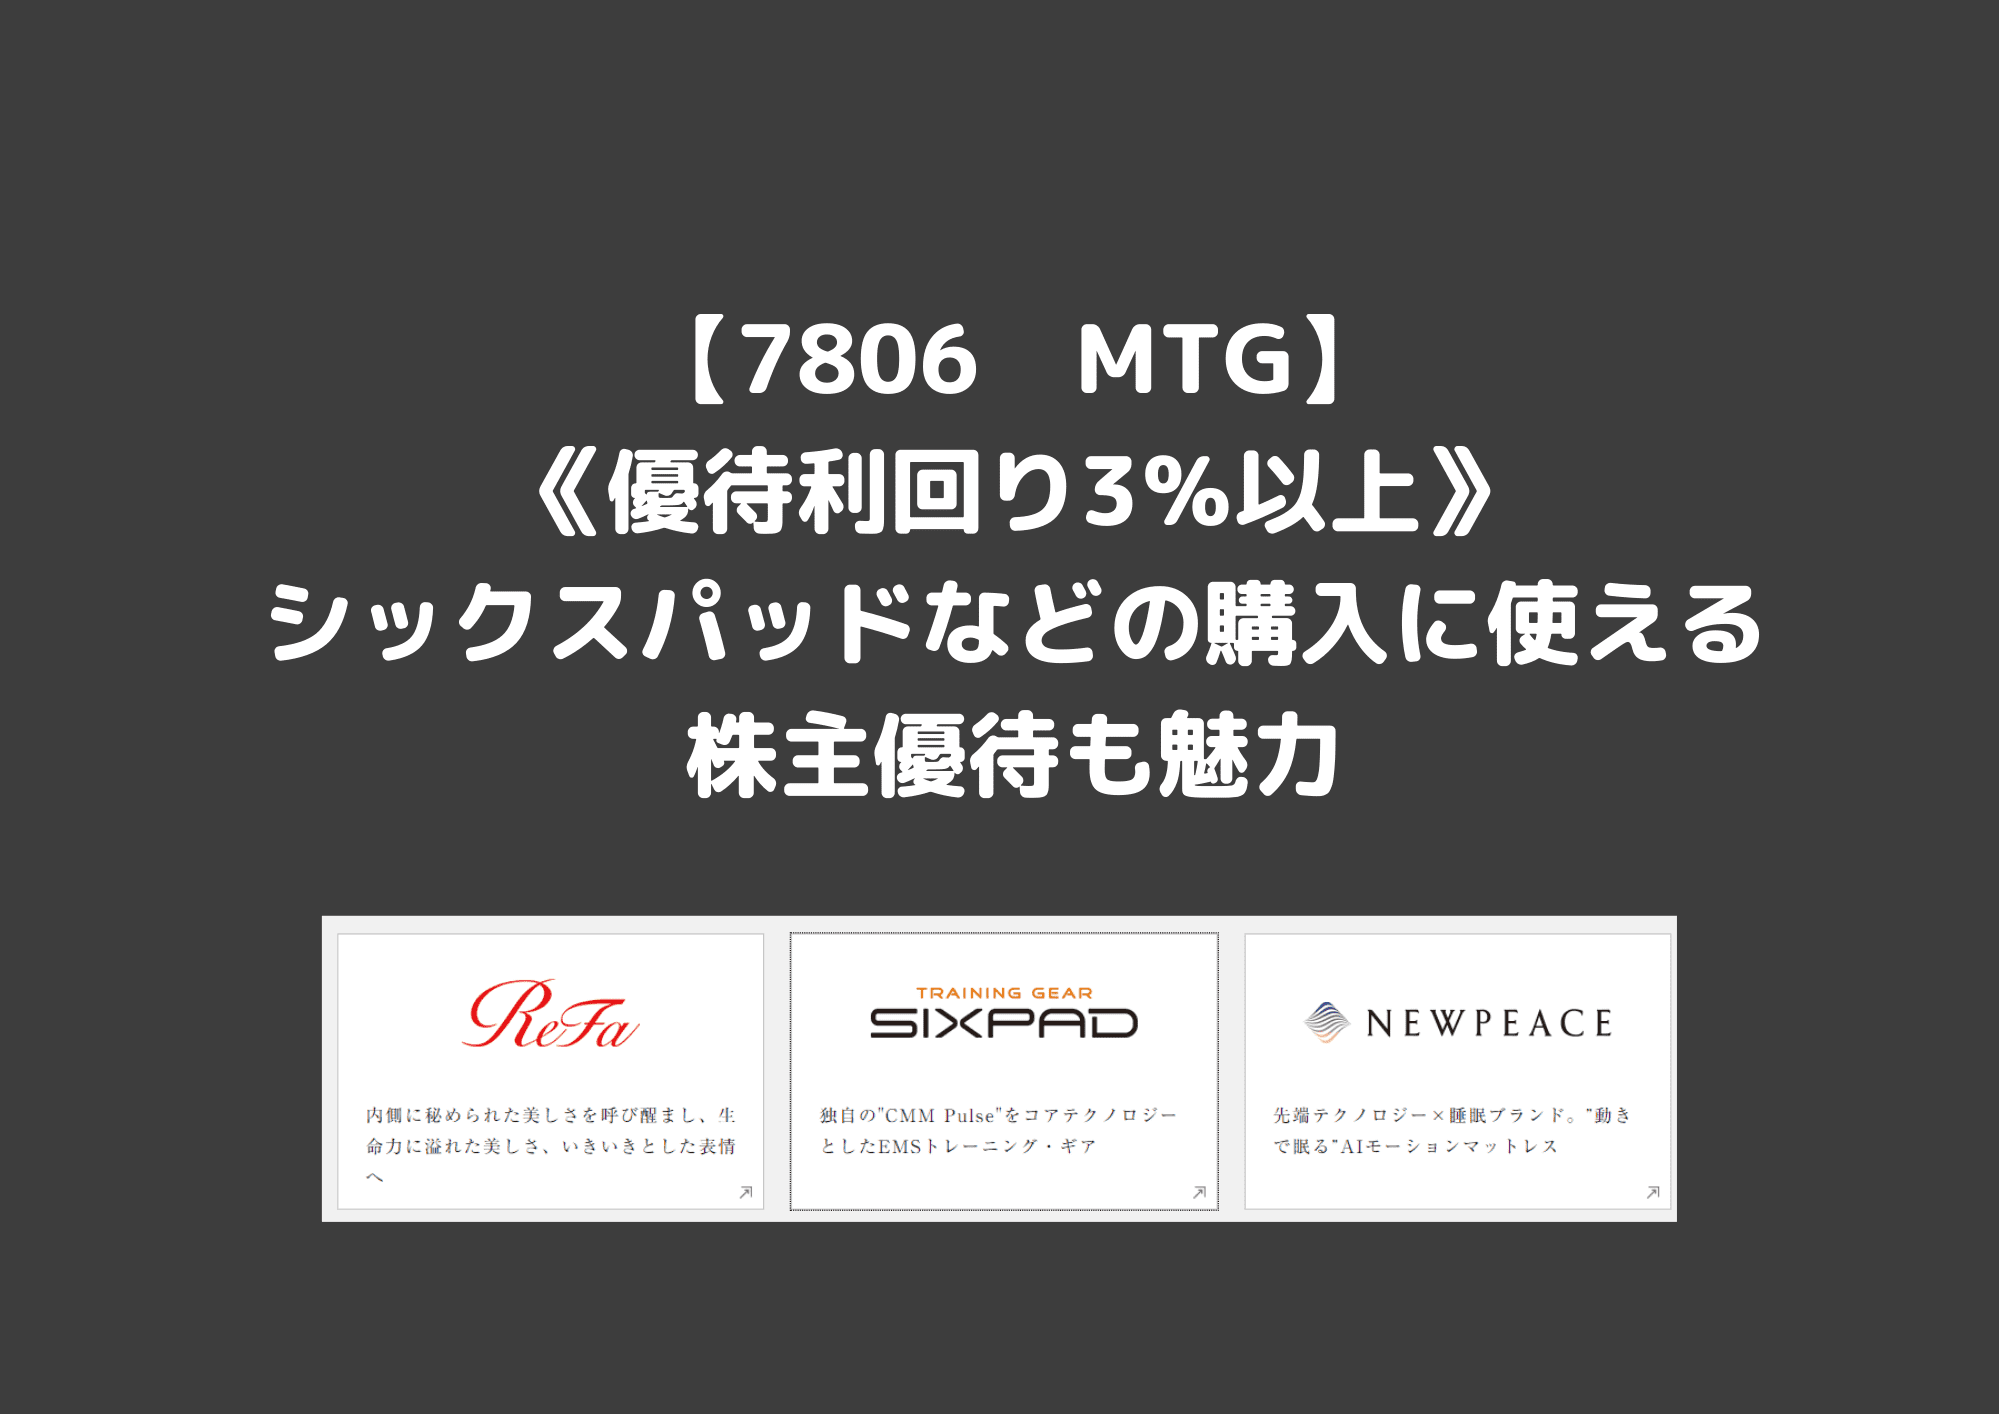 MTG株主優待 ☆シックスパッド、 リファ等、6種類☆ カタログから選択！4万円